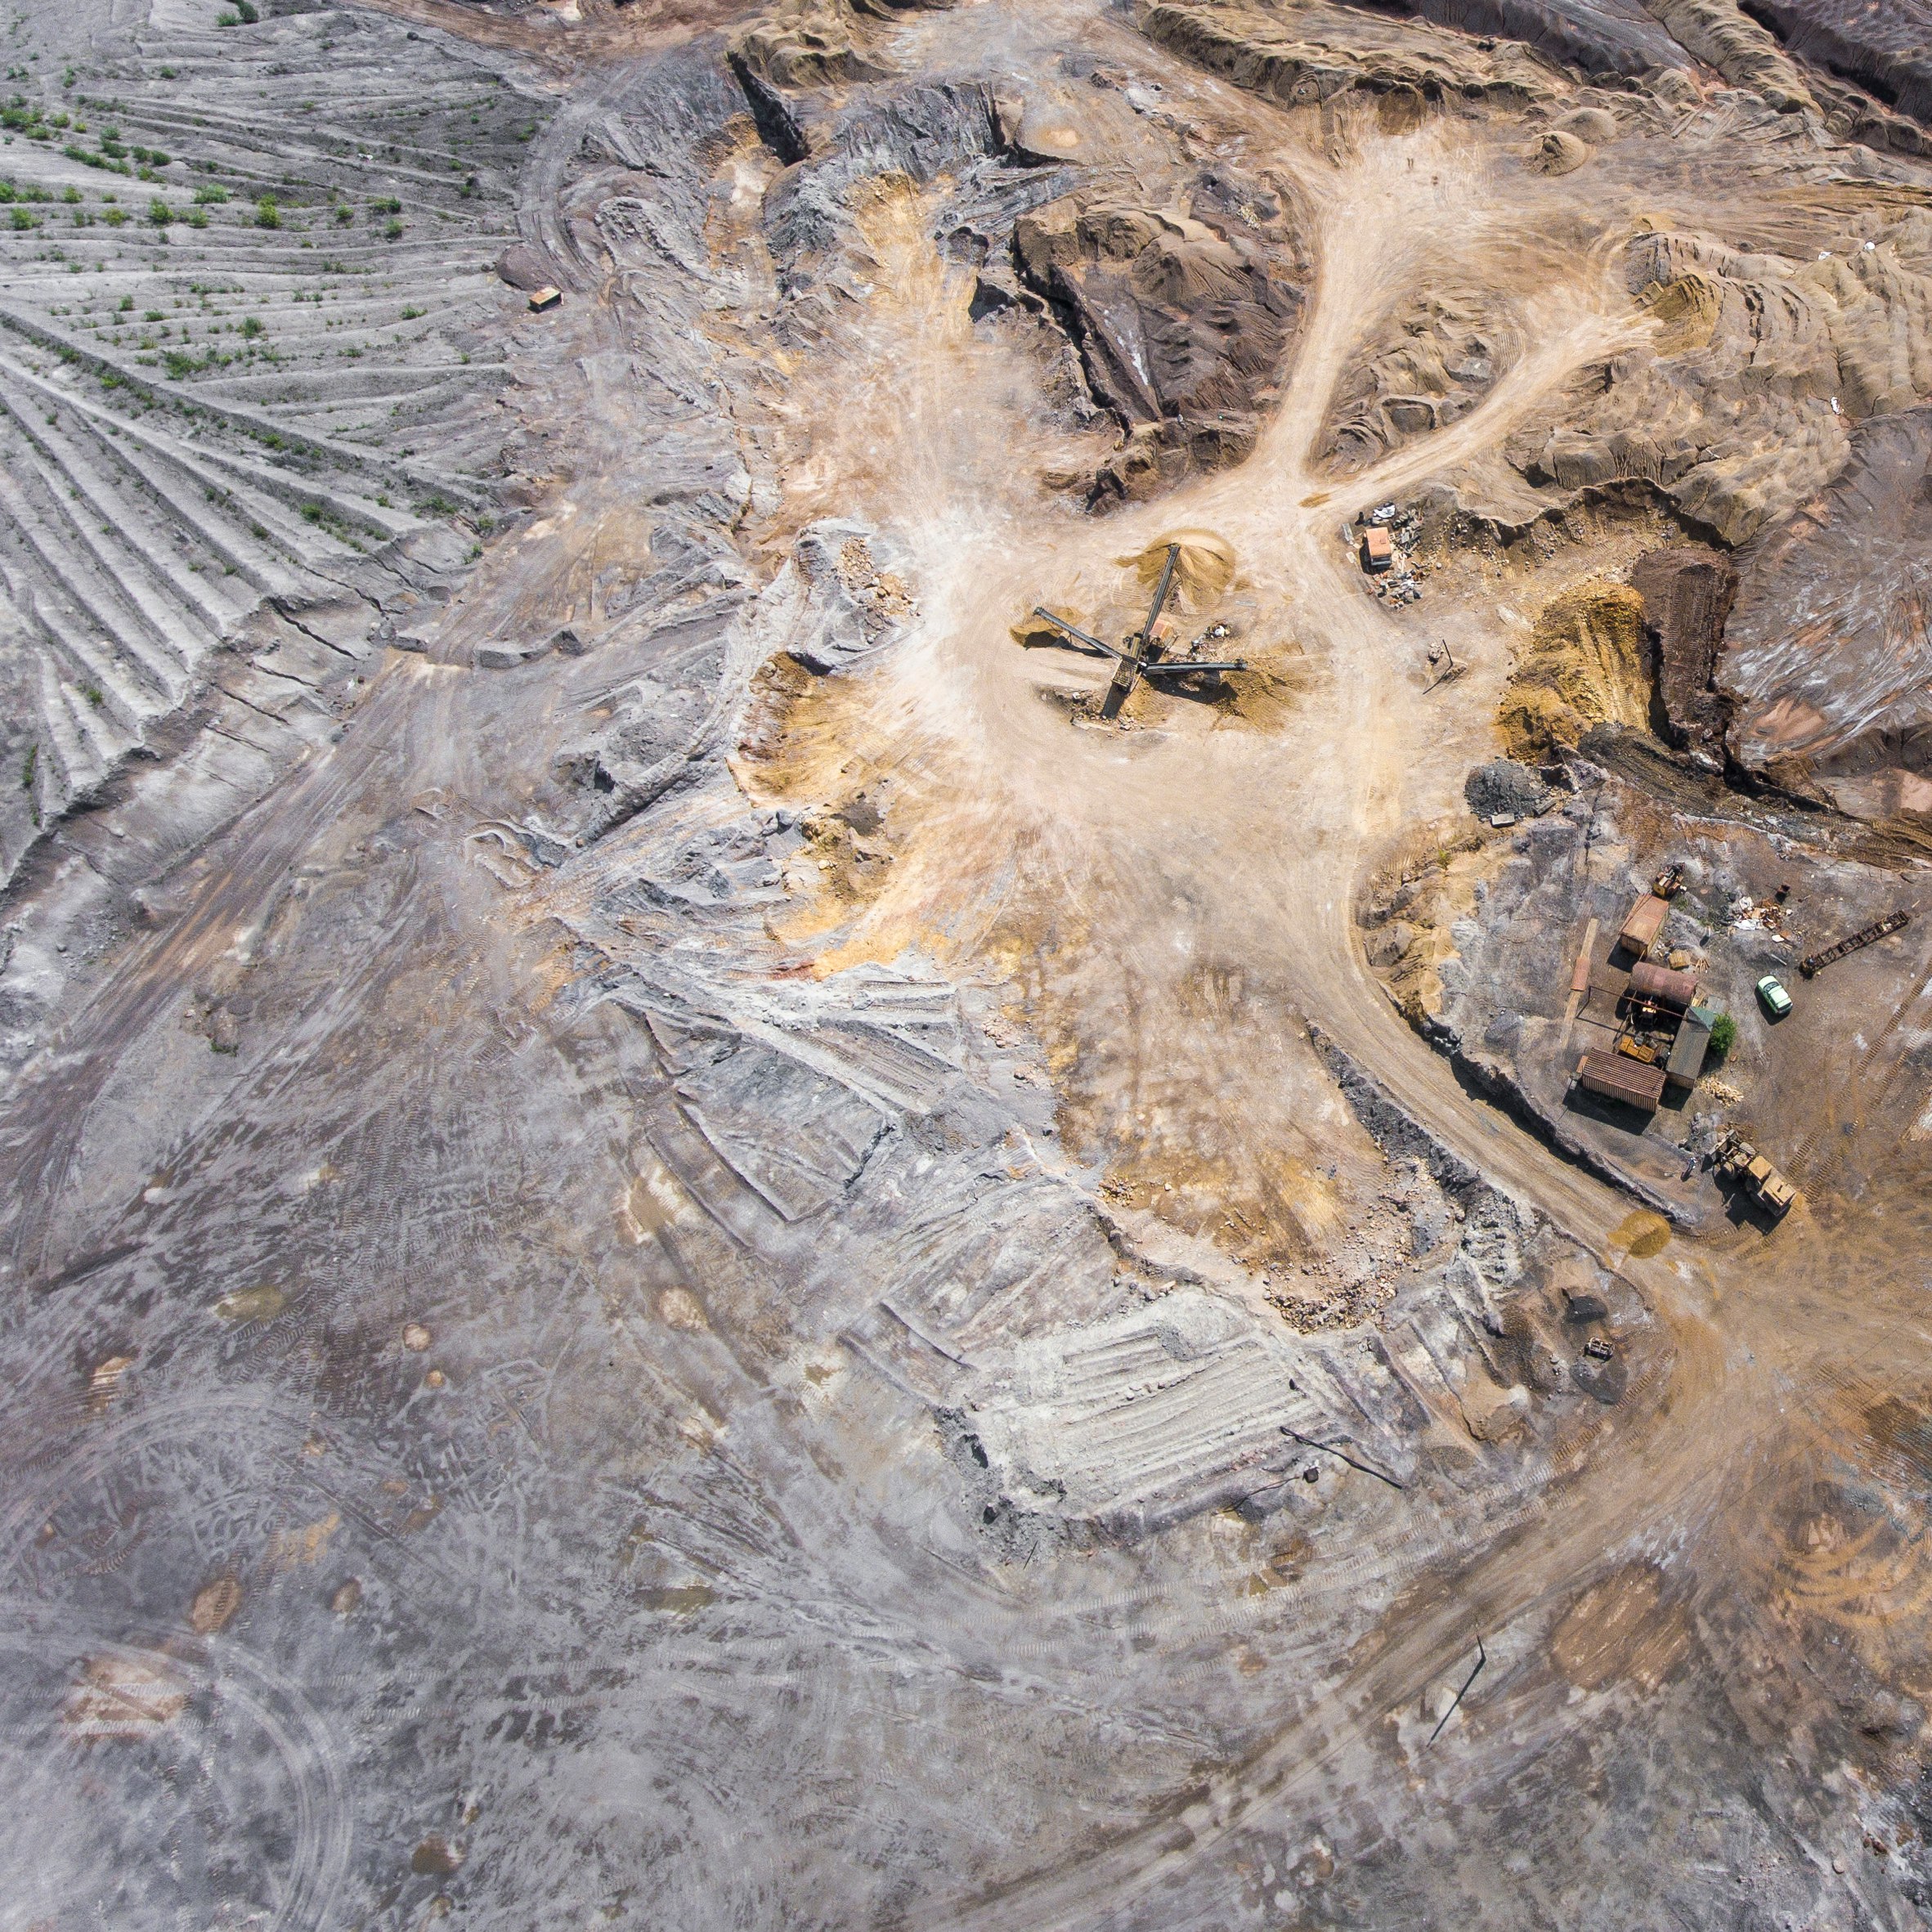 bird's eye view of mining area